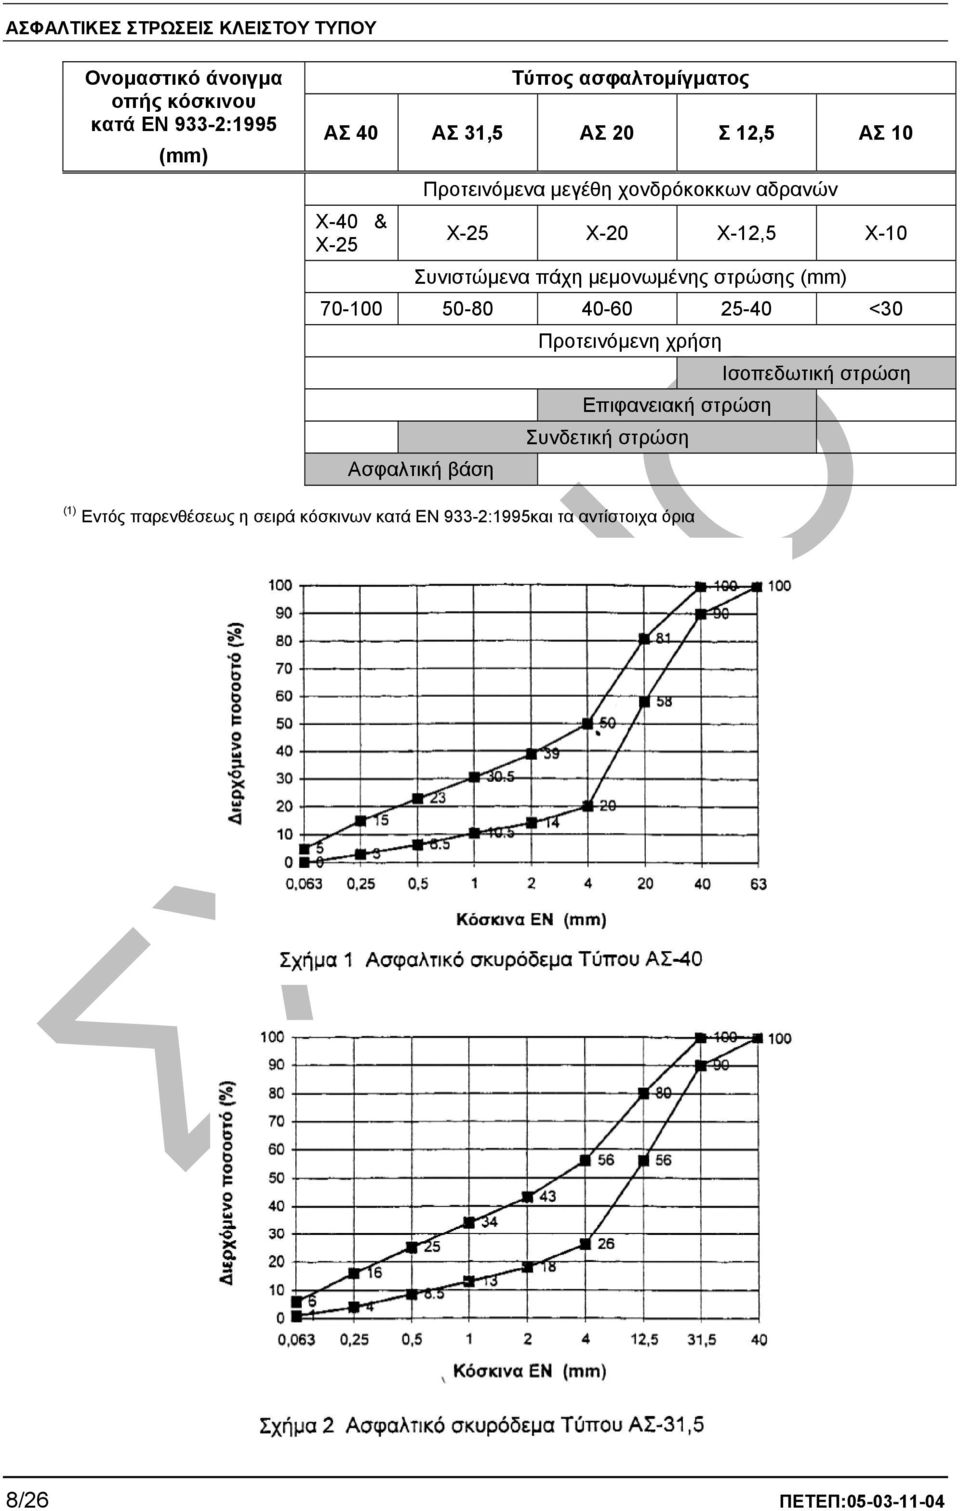 (mm) 70-100 50-80 40-60 25-40 <30 Ασφαλτική βάση Προτεινόµενη χρήση Επιφανειακή στρώση Συνδετική στρώση